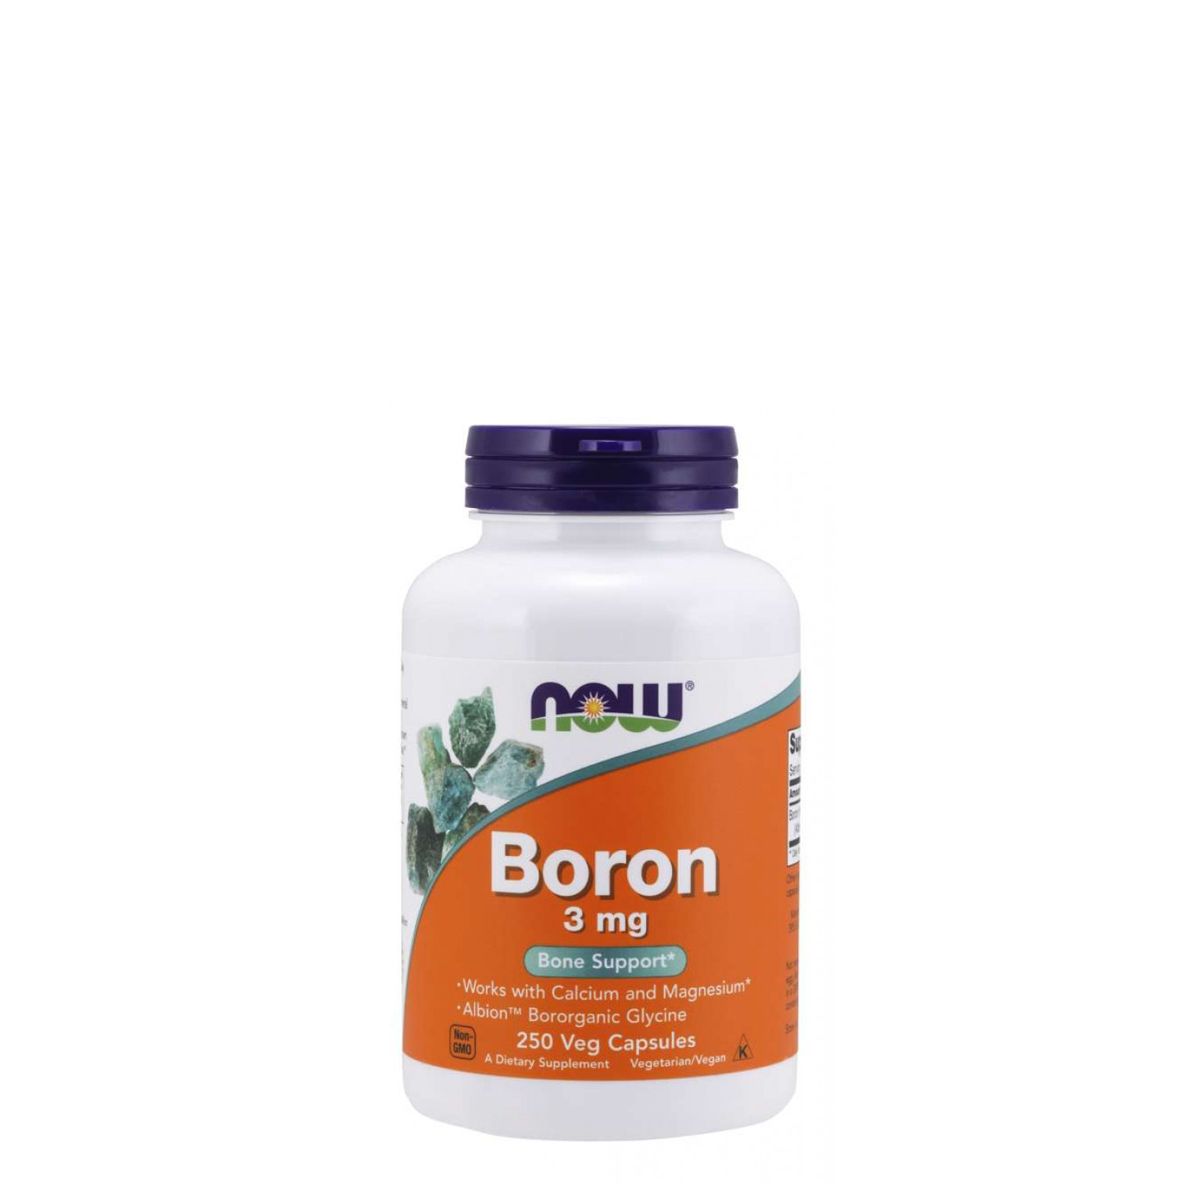 Csontstruktúra támogató bór 3 mg, Now Boron (Bororganic Glycine), 250 kapszula